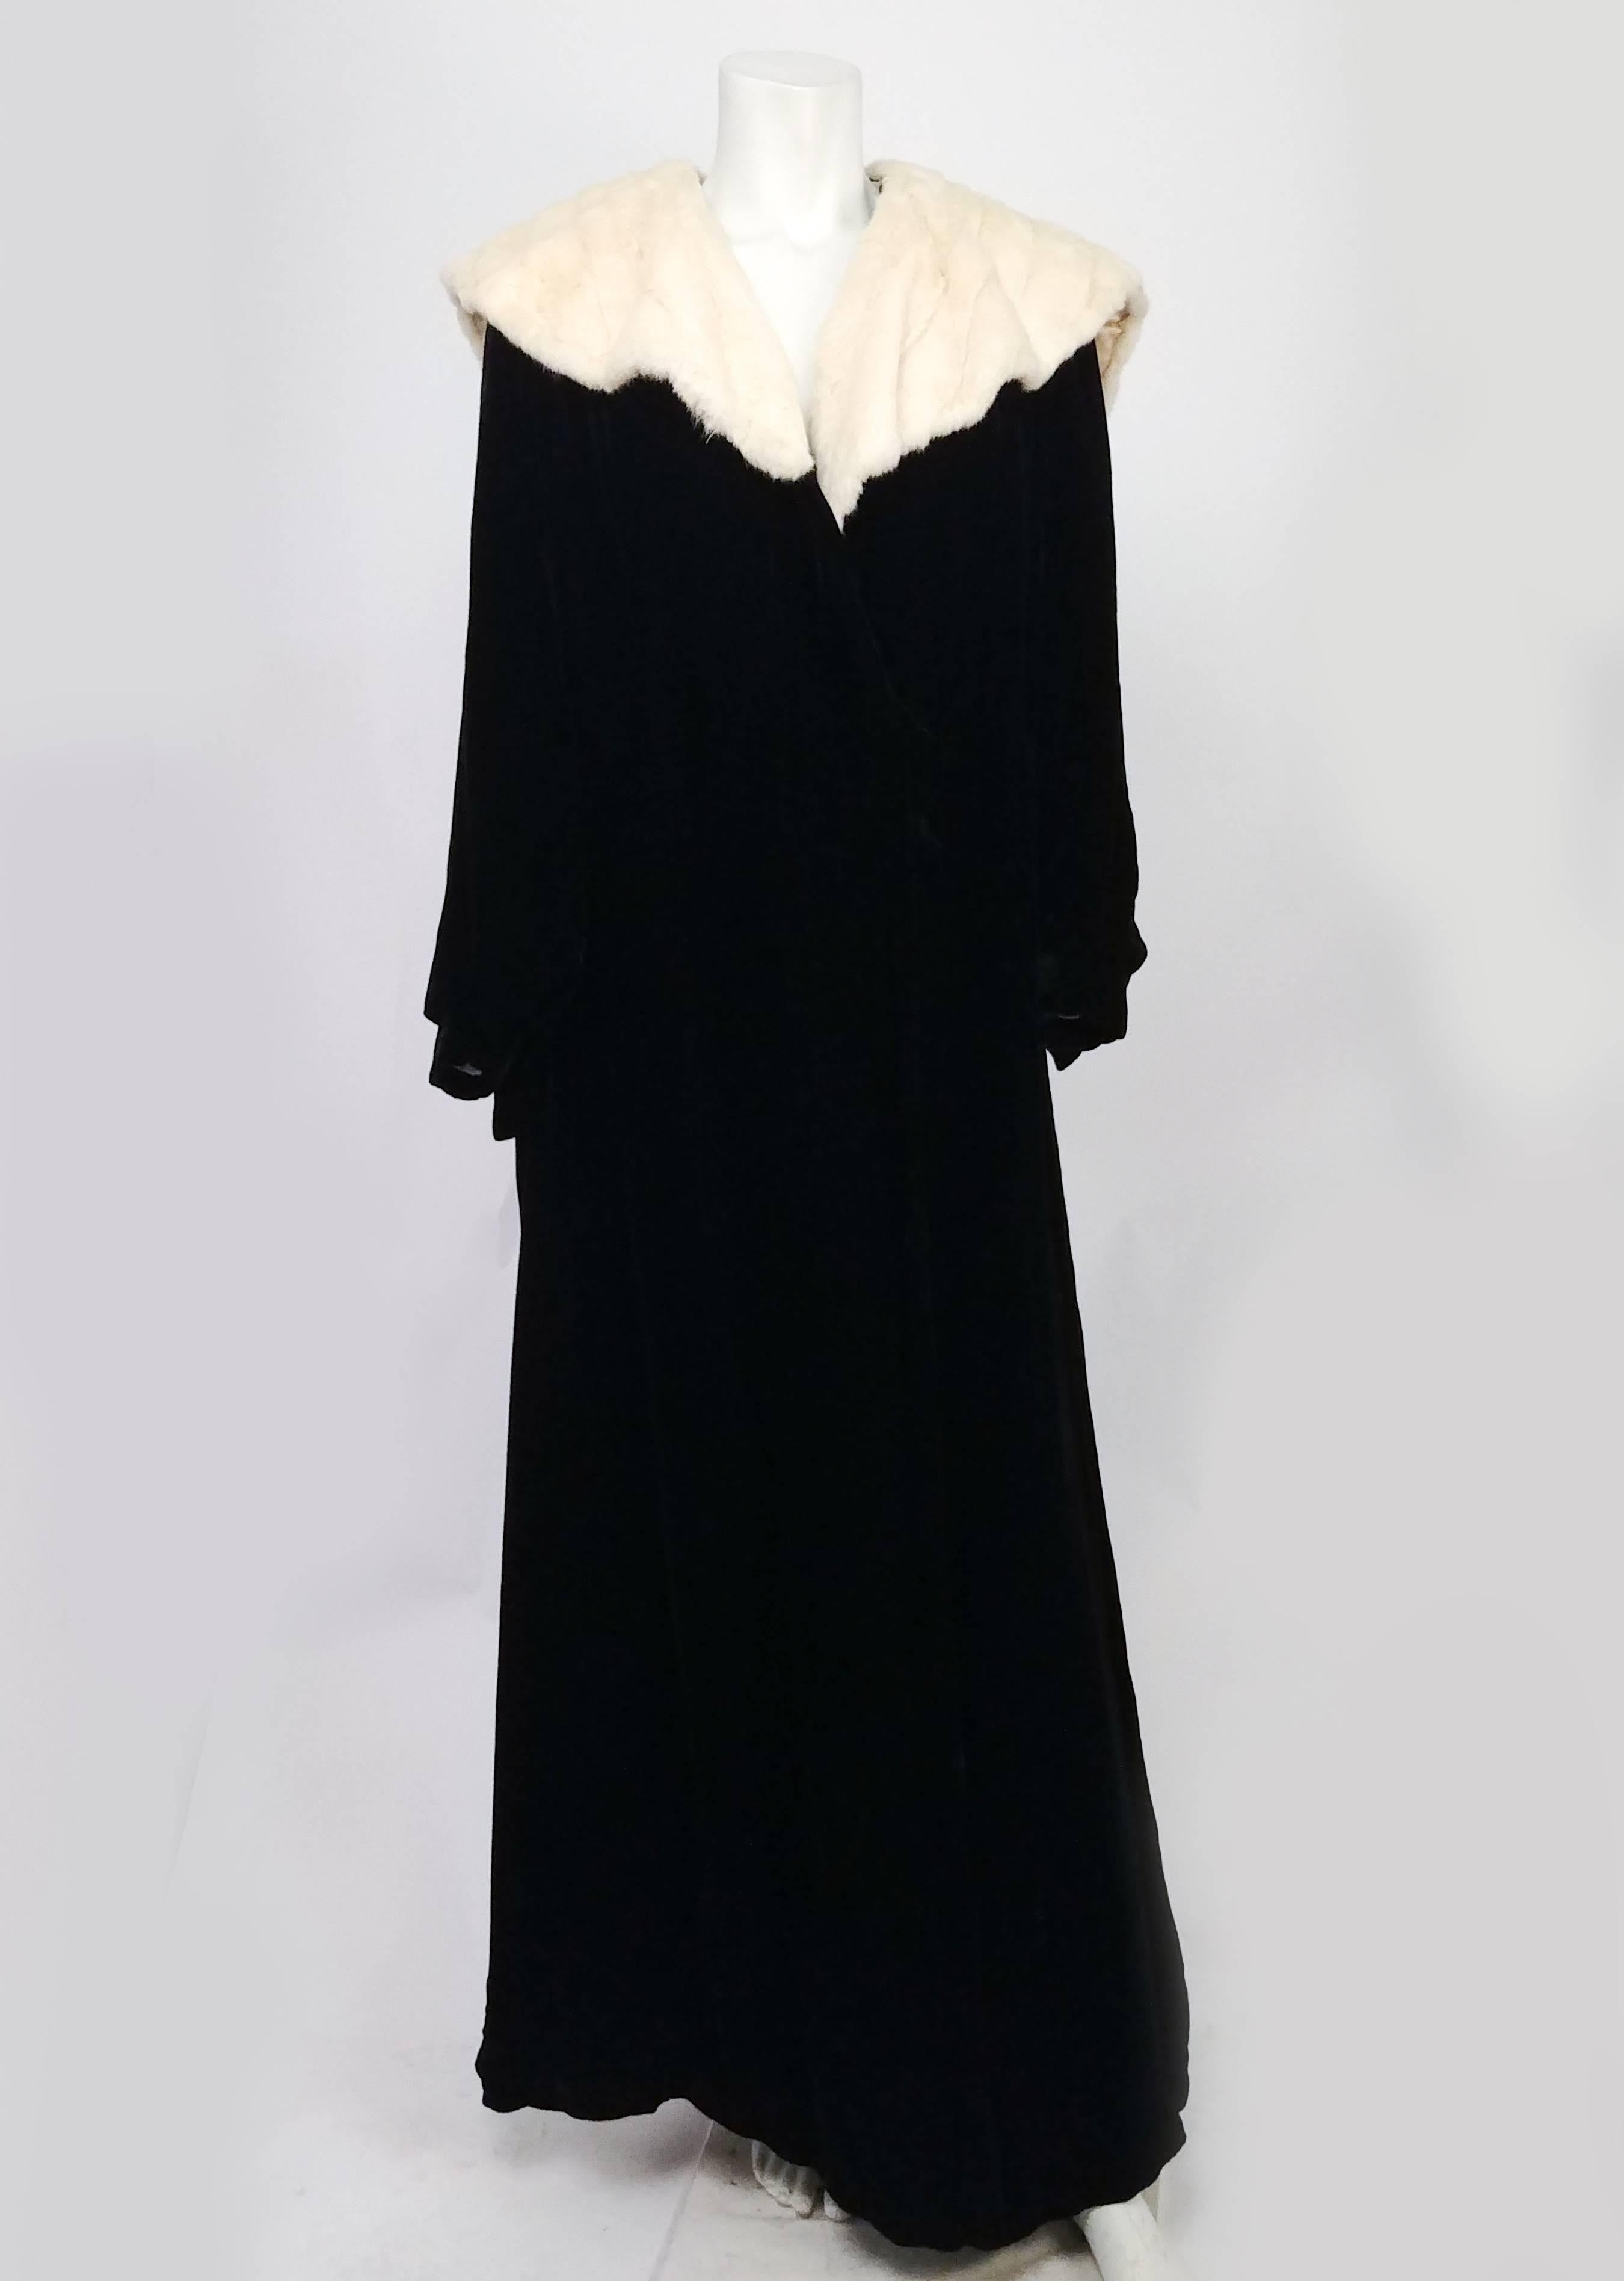 1930s Black Velvet Opera Coat w/ Ermine Collar. Silk velvet coat with bishop sleeves, lined with white silk, wide ermine collar. 